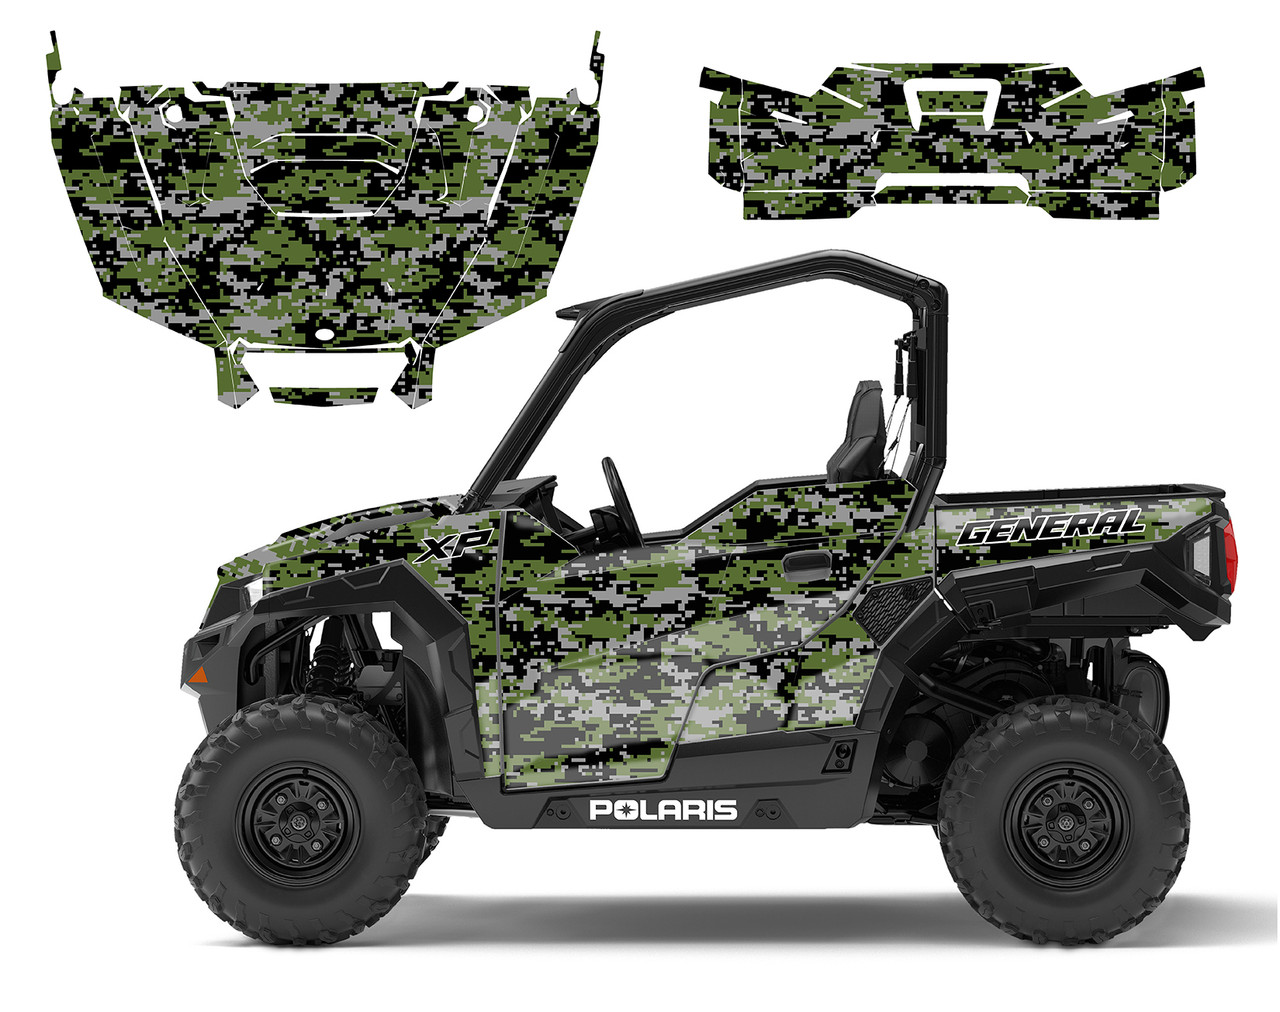 Polaris General 1000 XP Army Green Digital Camo graphics decal kit